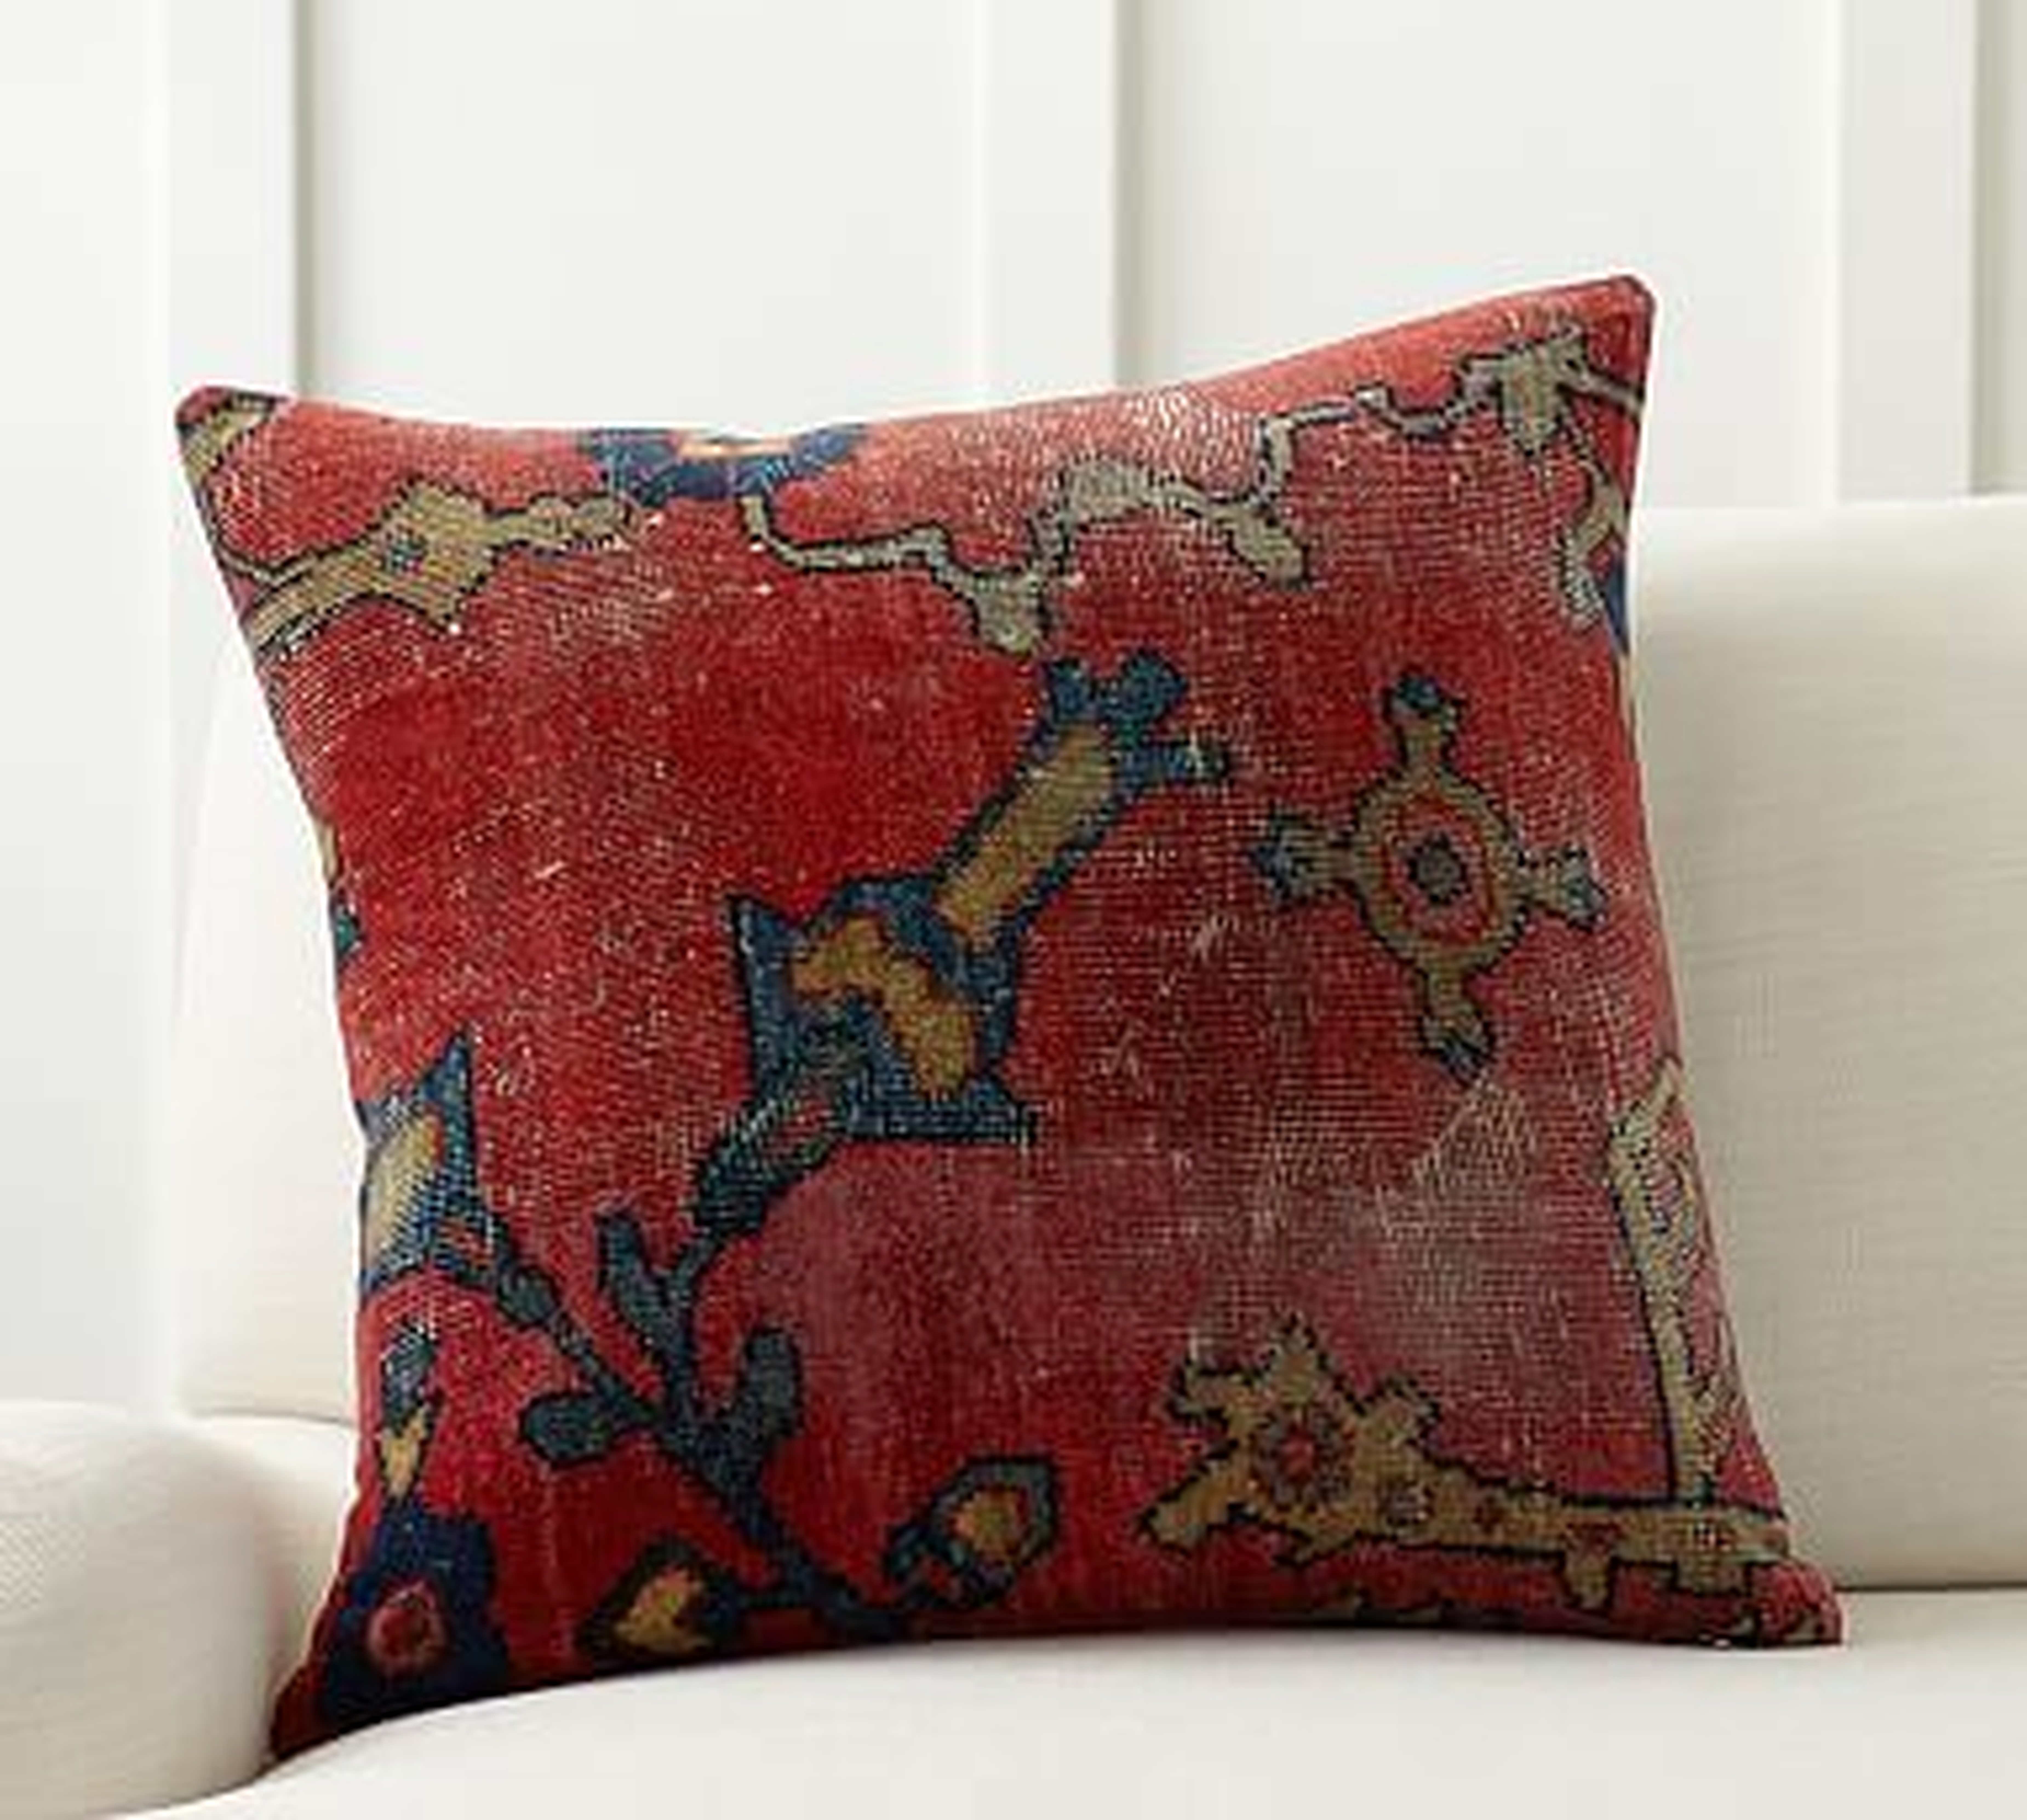 Dara Persian Pillow Cover Red Multi, 22" x 22" - Pottery Barn